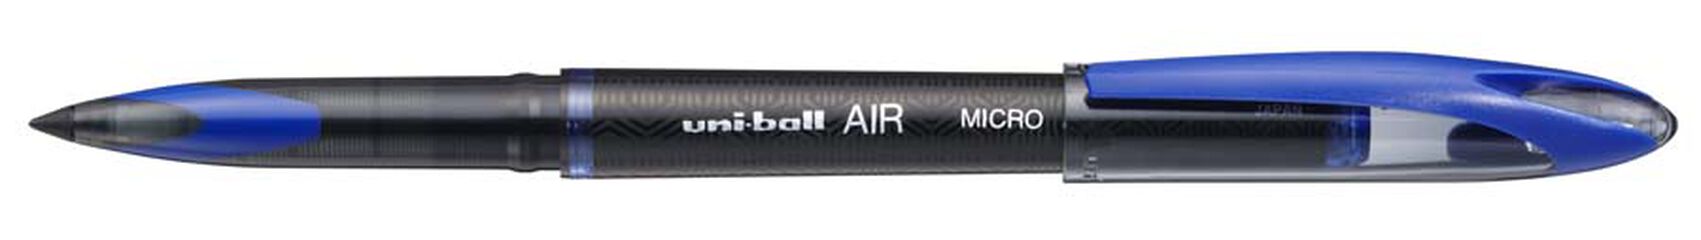 Roller Uni-ball Air Micro UBA-188M azul